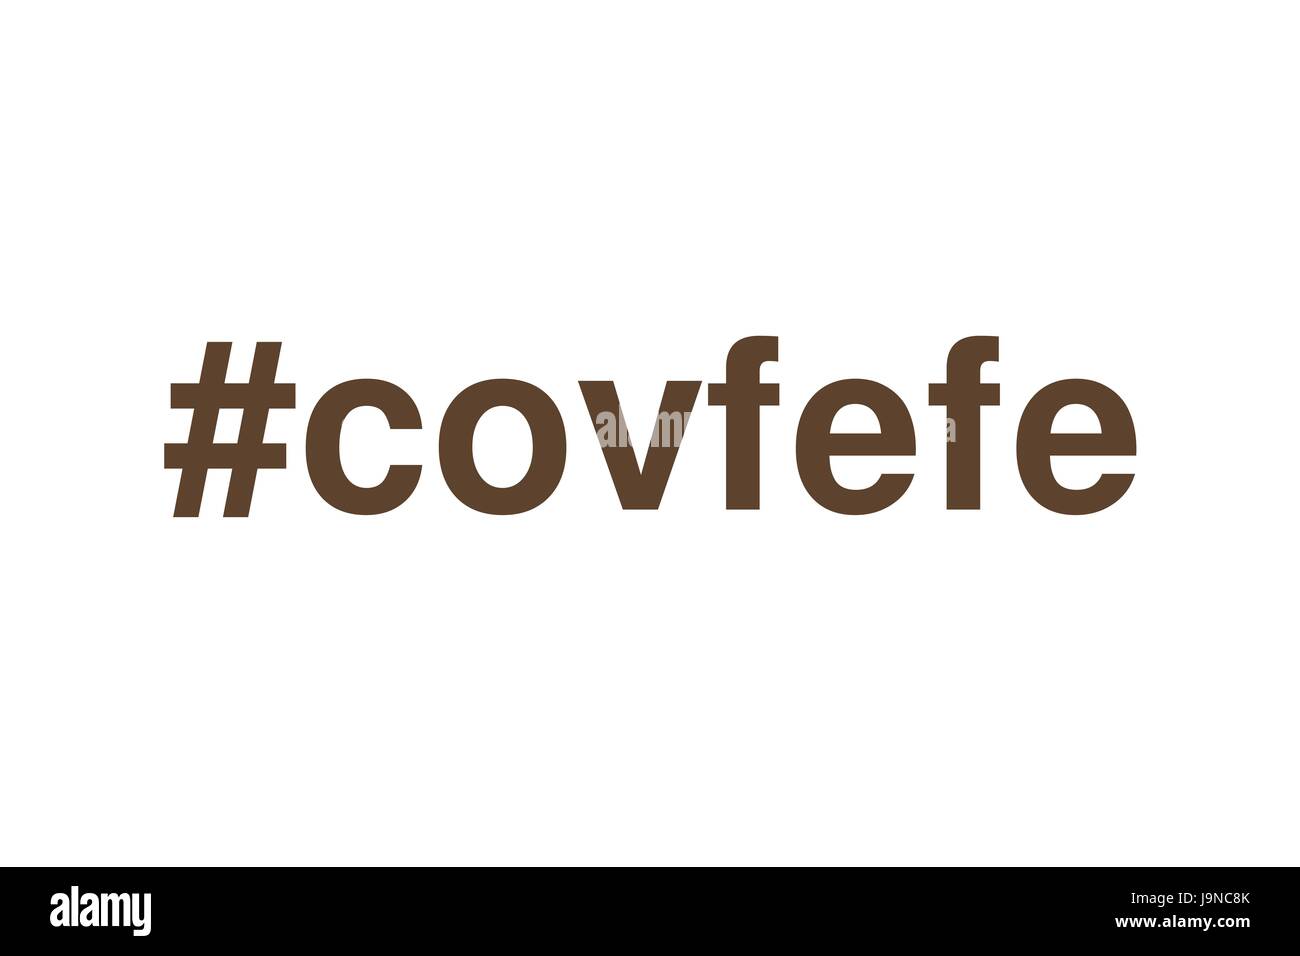 US-Präsident Hashtag Covfefe Tweet Label Tippfehler Stockfoto